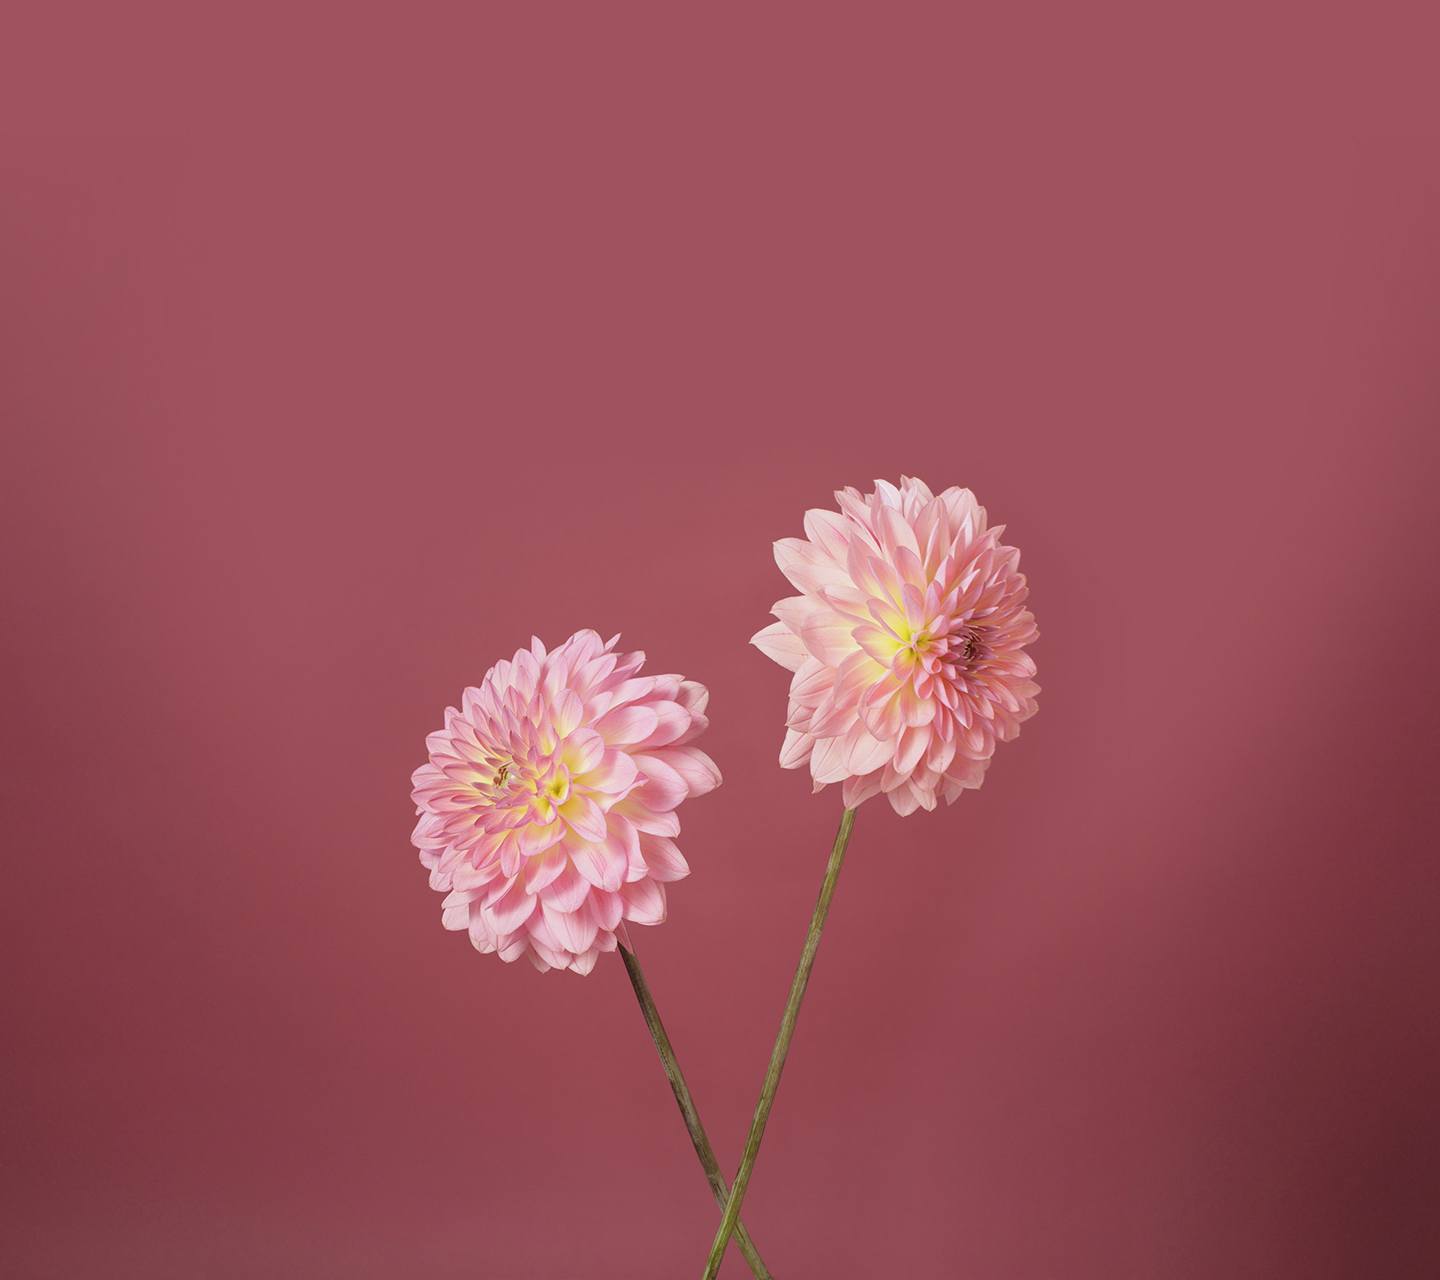 lg k10 wallpaper,blume,rosa,pflanze,blütenblatt,blühende pflanze